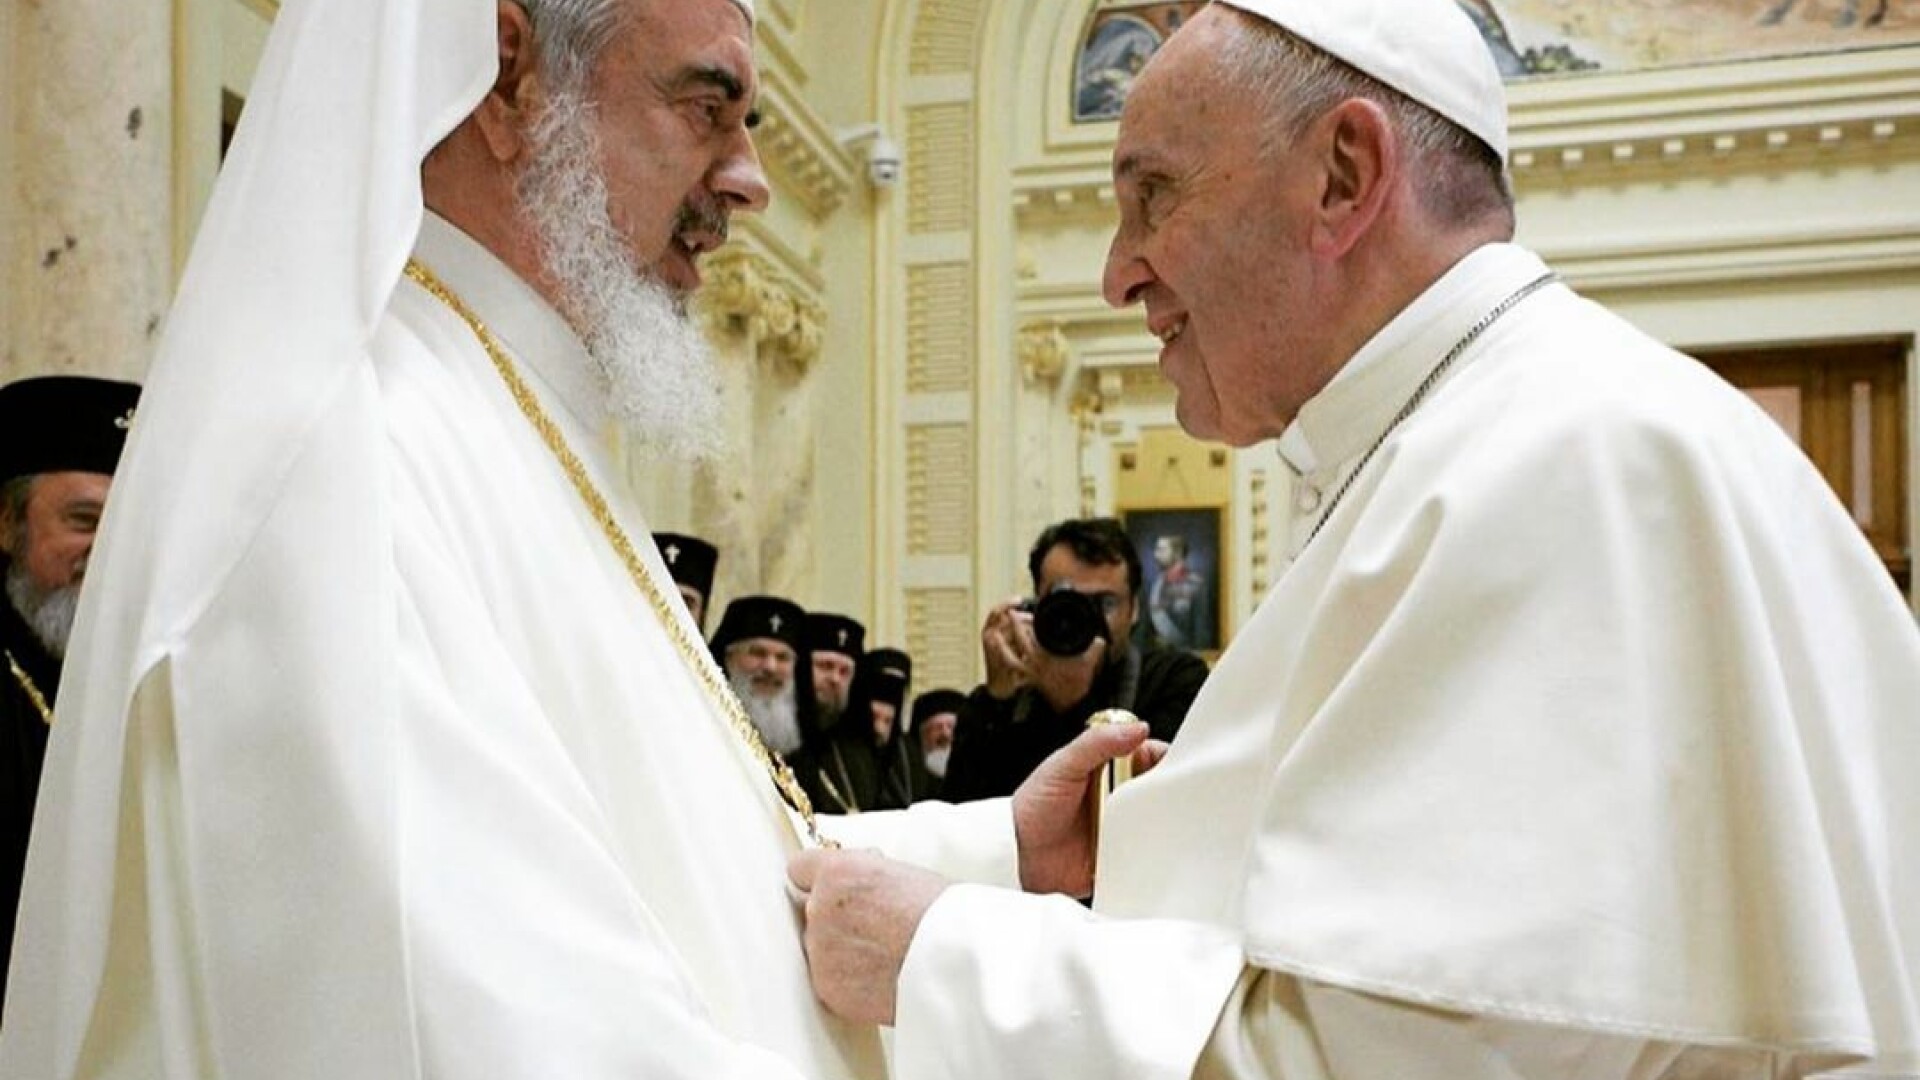 Vizita Papei Francisc in Romania, imagini de pe contul oficial de Instagram - 2